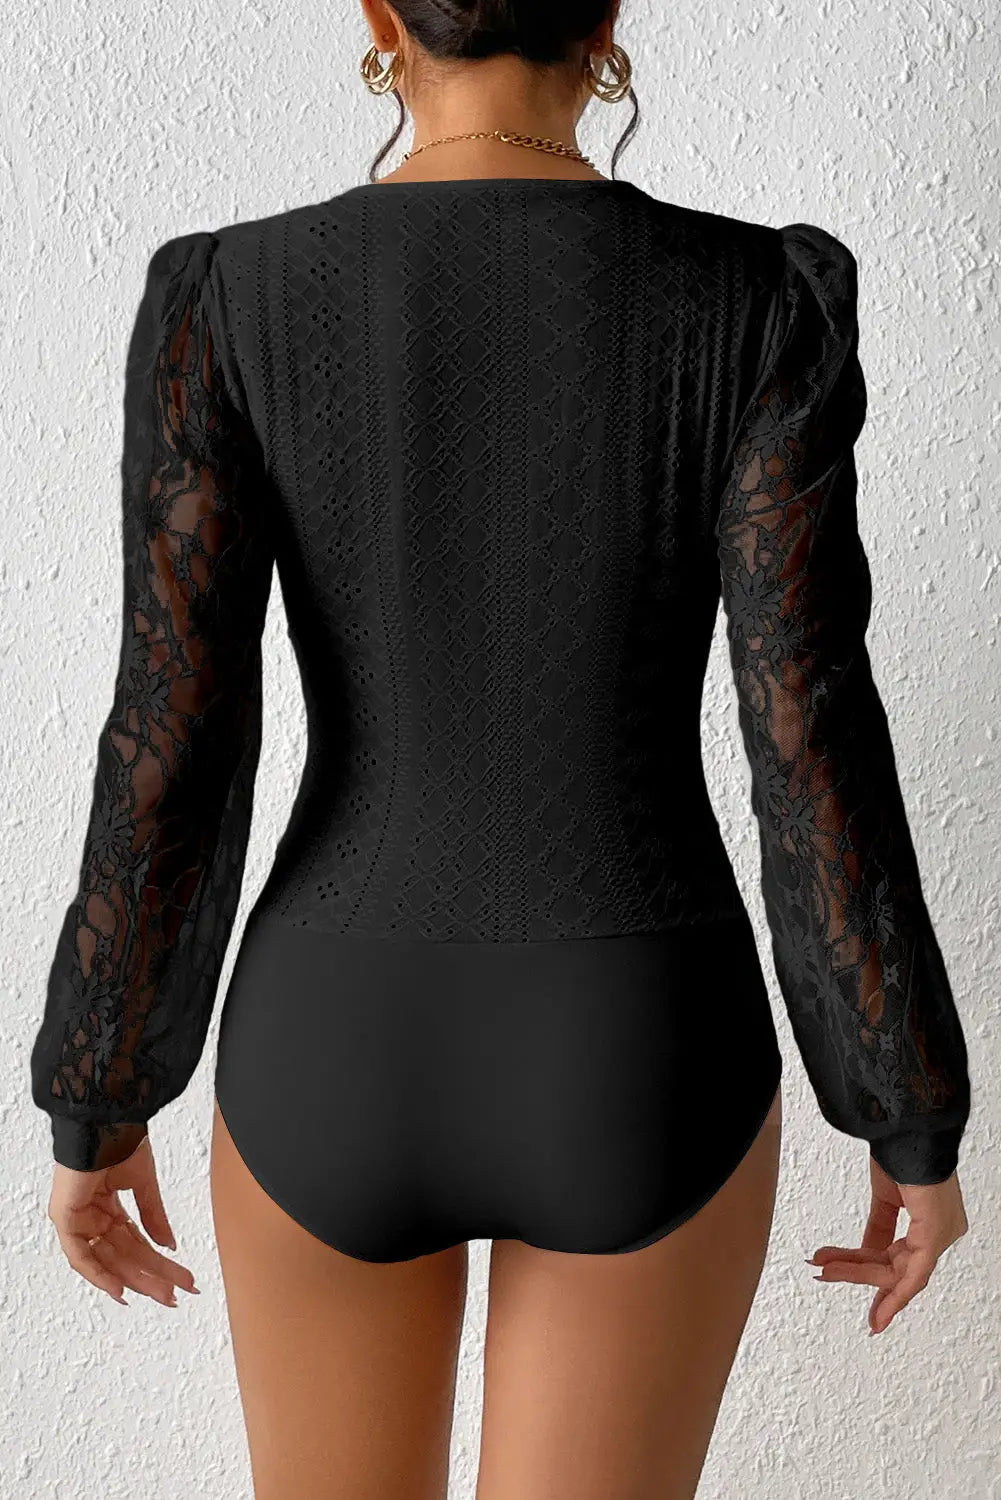 Black frenchy contrast lace bishop sleeve bodysuit - bodysuits